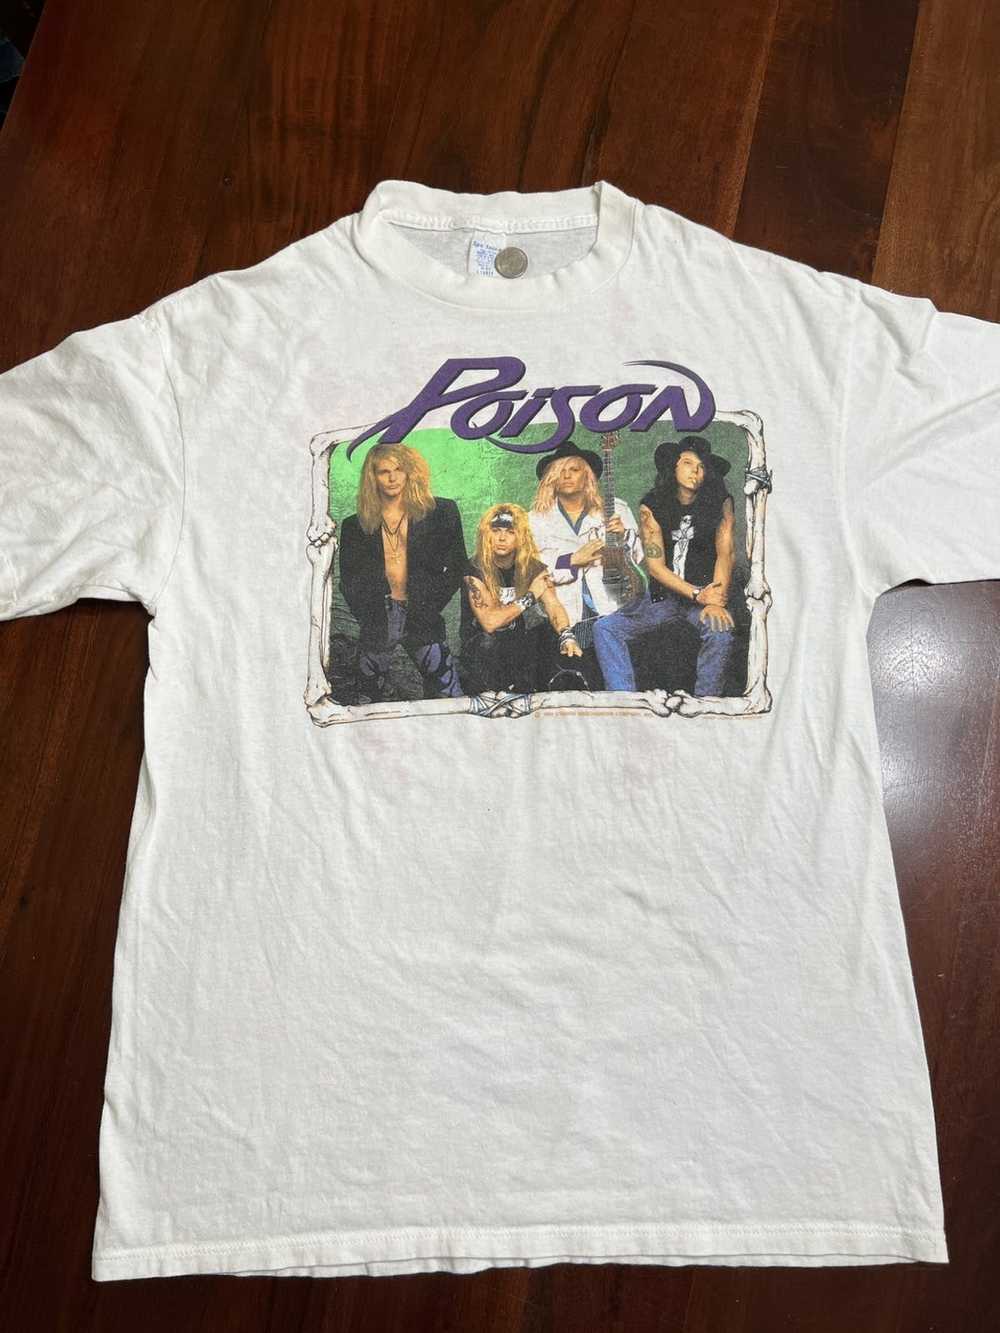 Vintage 1990 Poison Flesh and Blood tour shirt - image 1